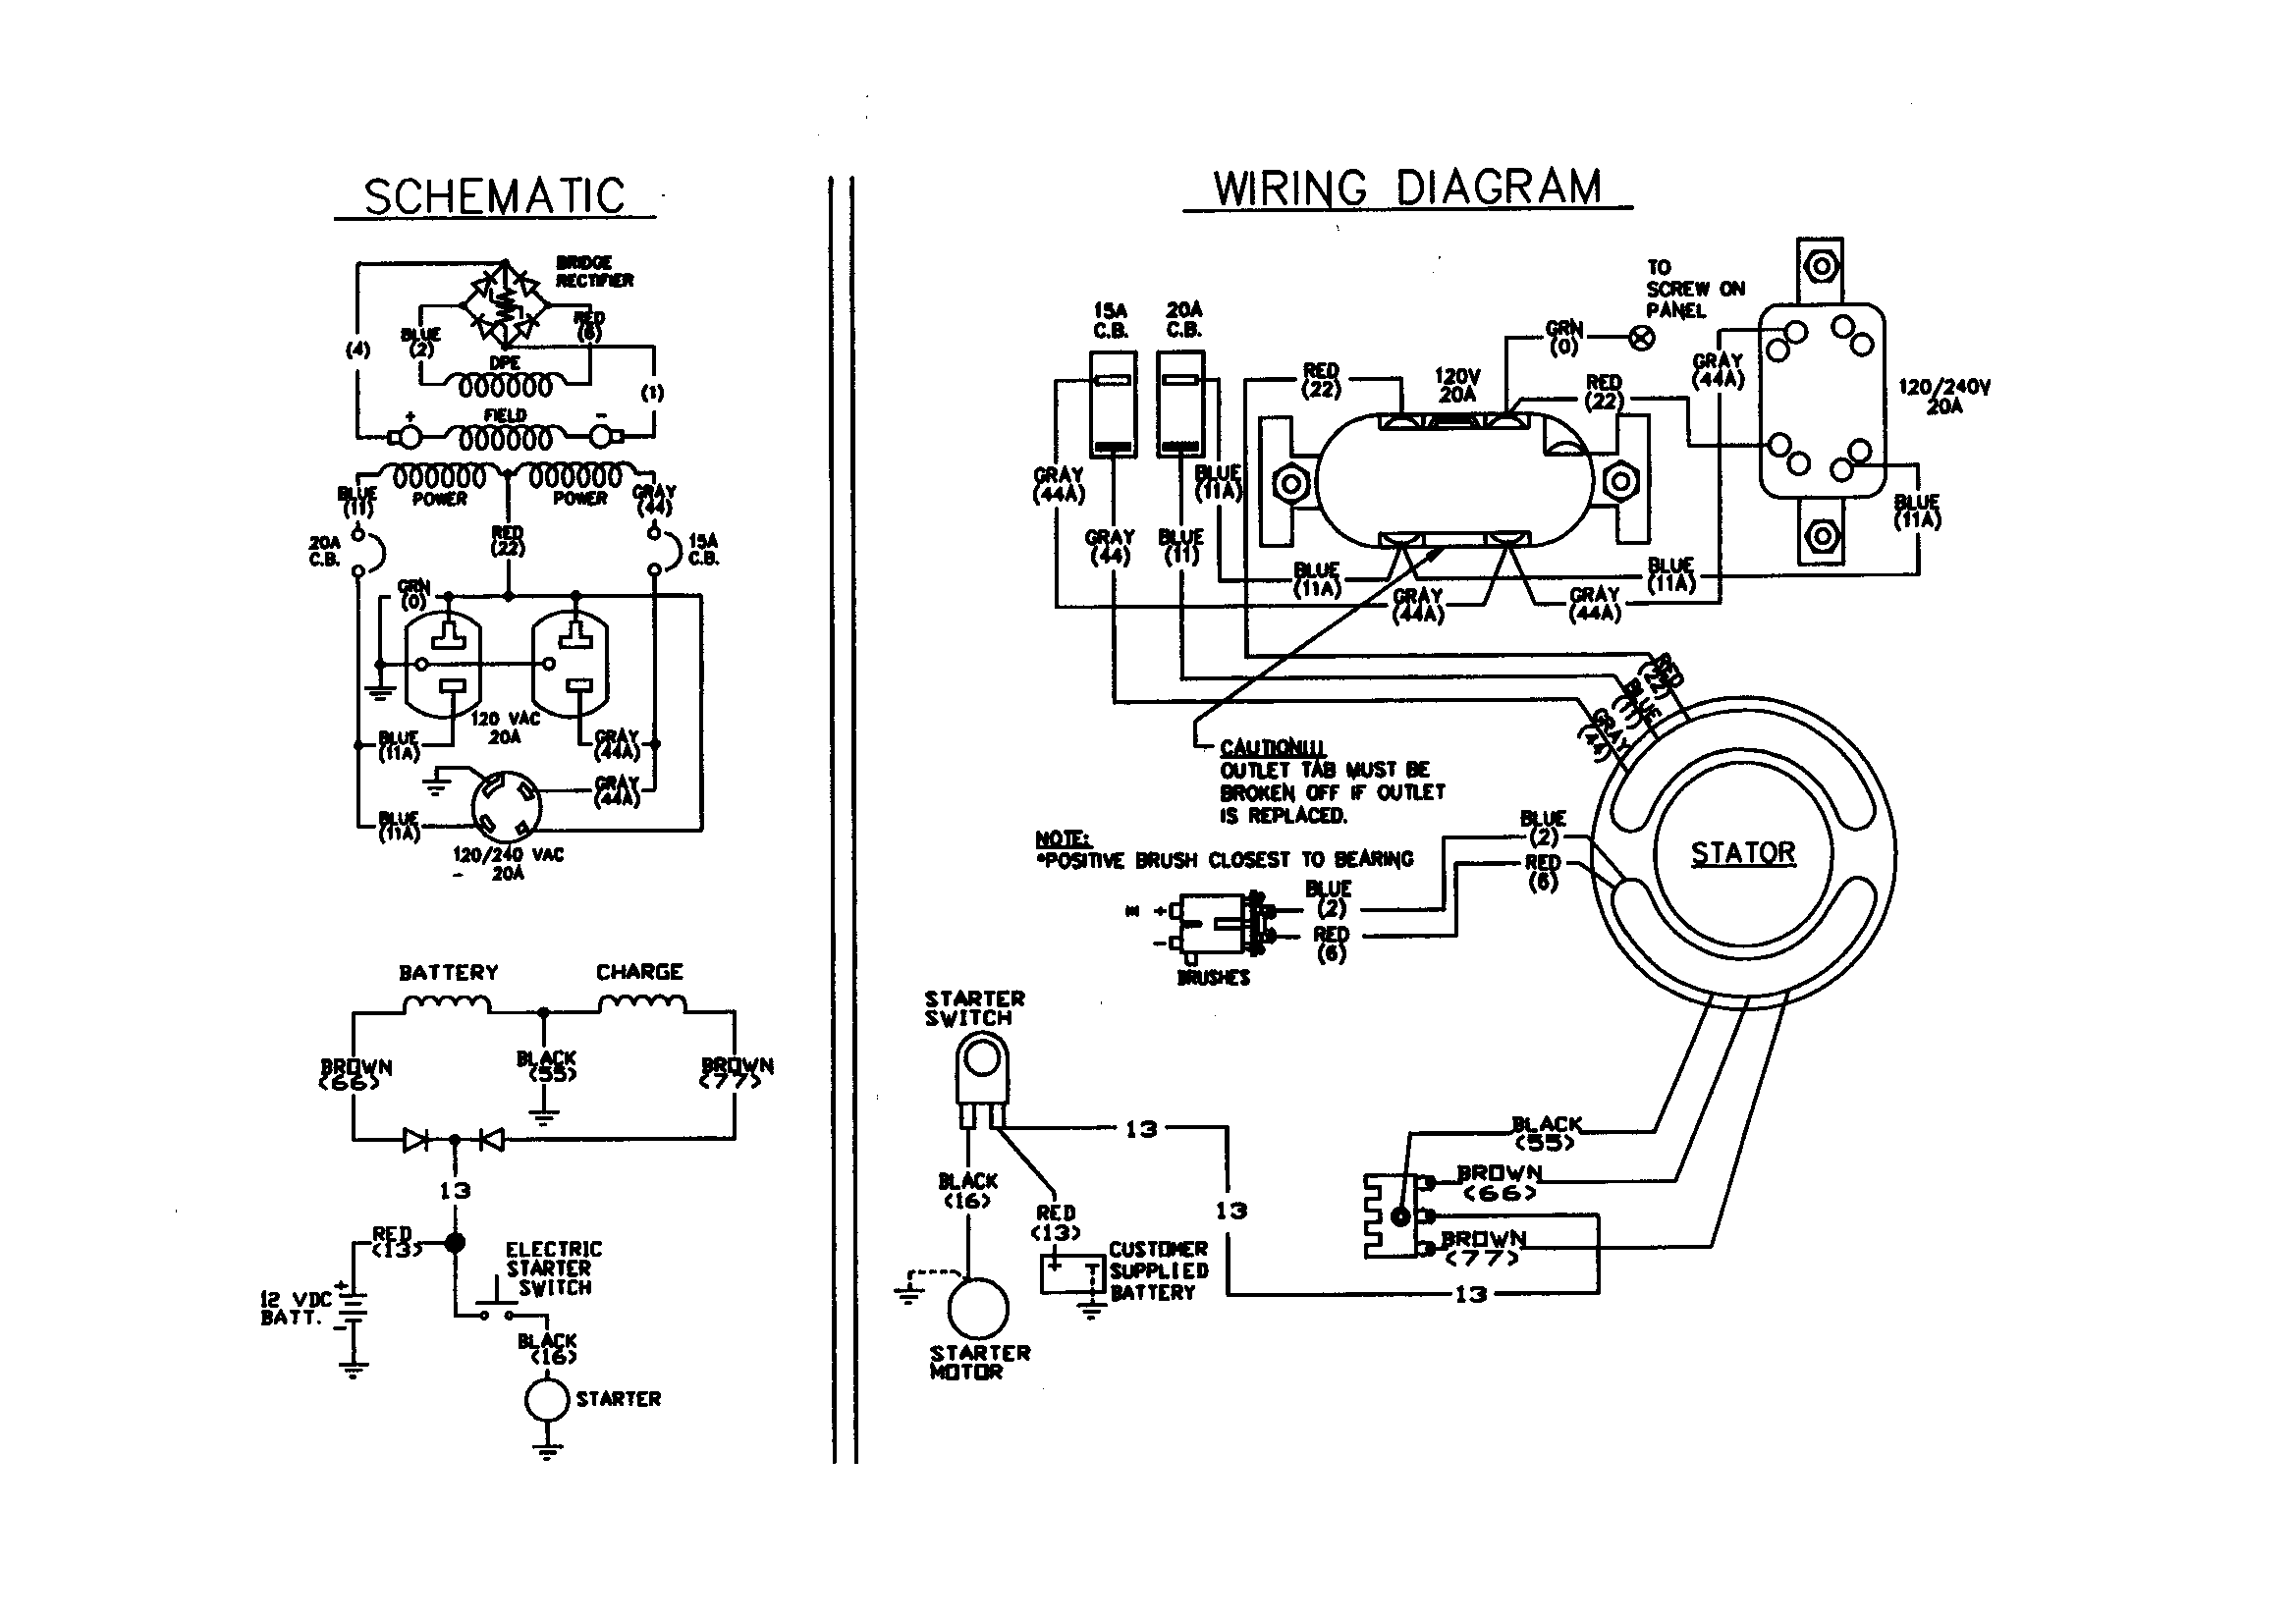 WIRING DIAGRAM/SCHEMATIC Diagram & Parts List for Model ... generator wiring diagram 